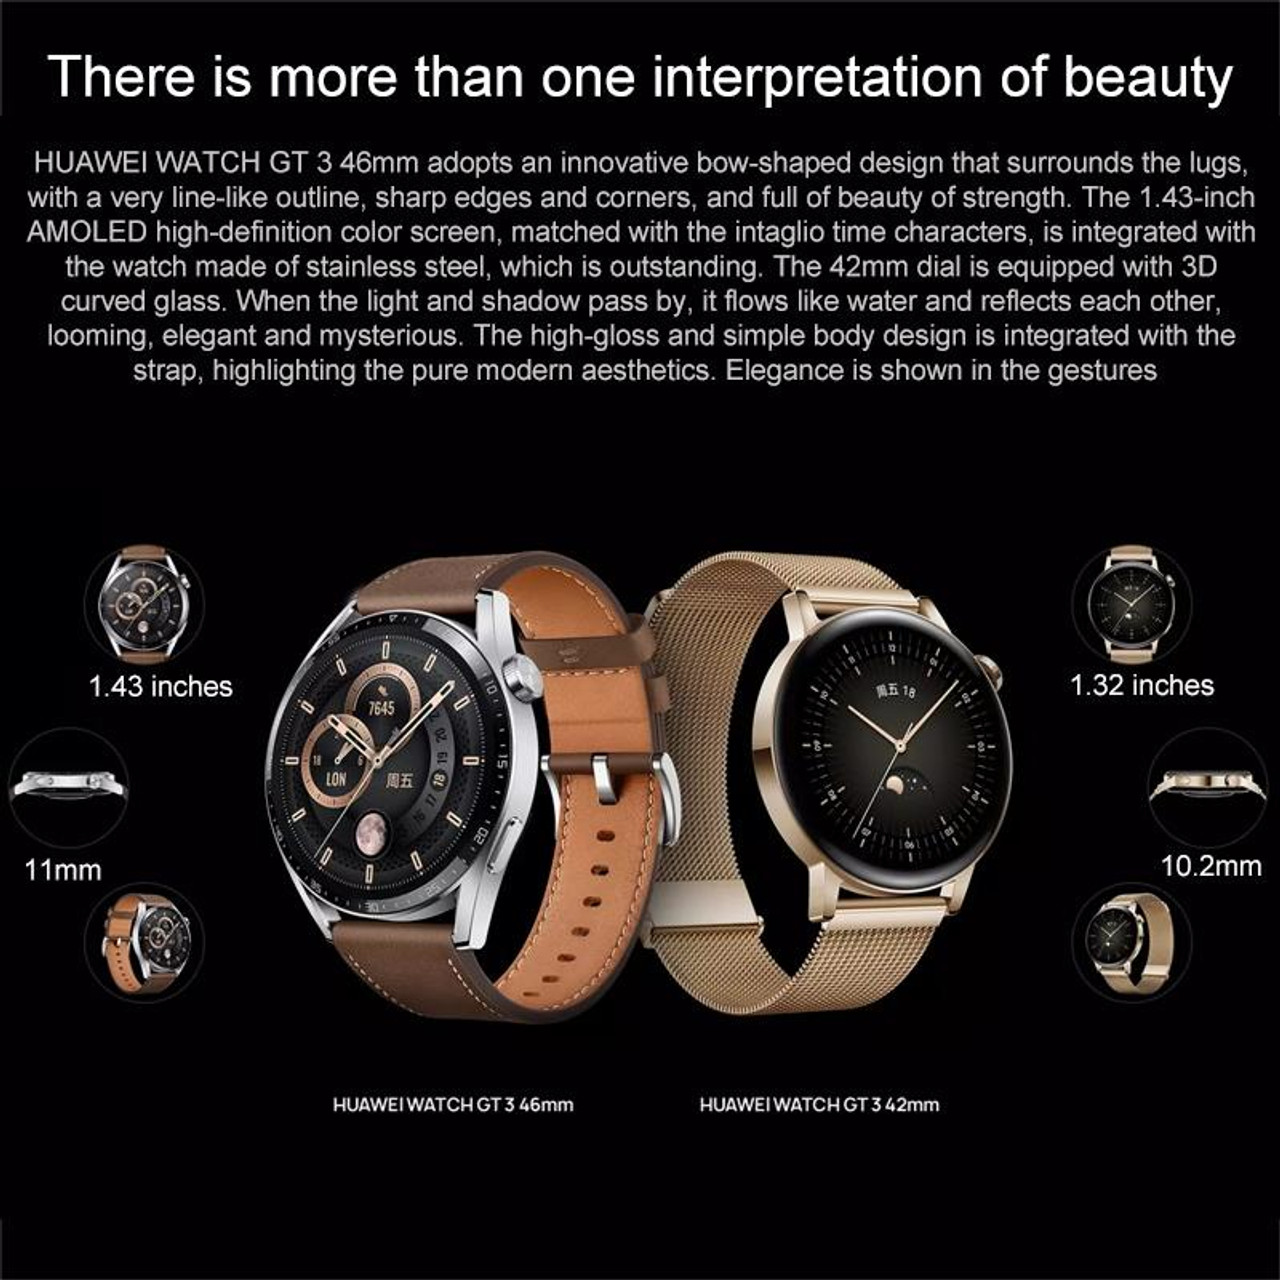 HUAWEI WATCH GT 3 42mm Smartwatch, 7 Days battery life